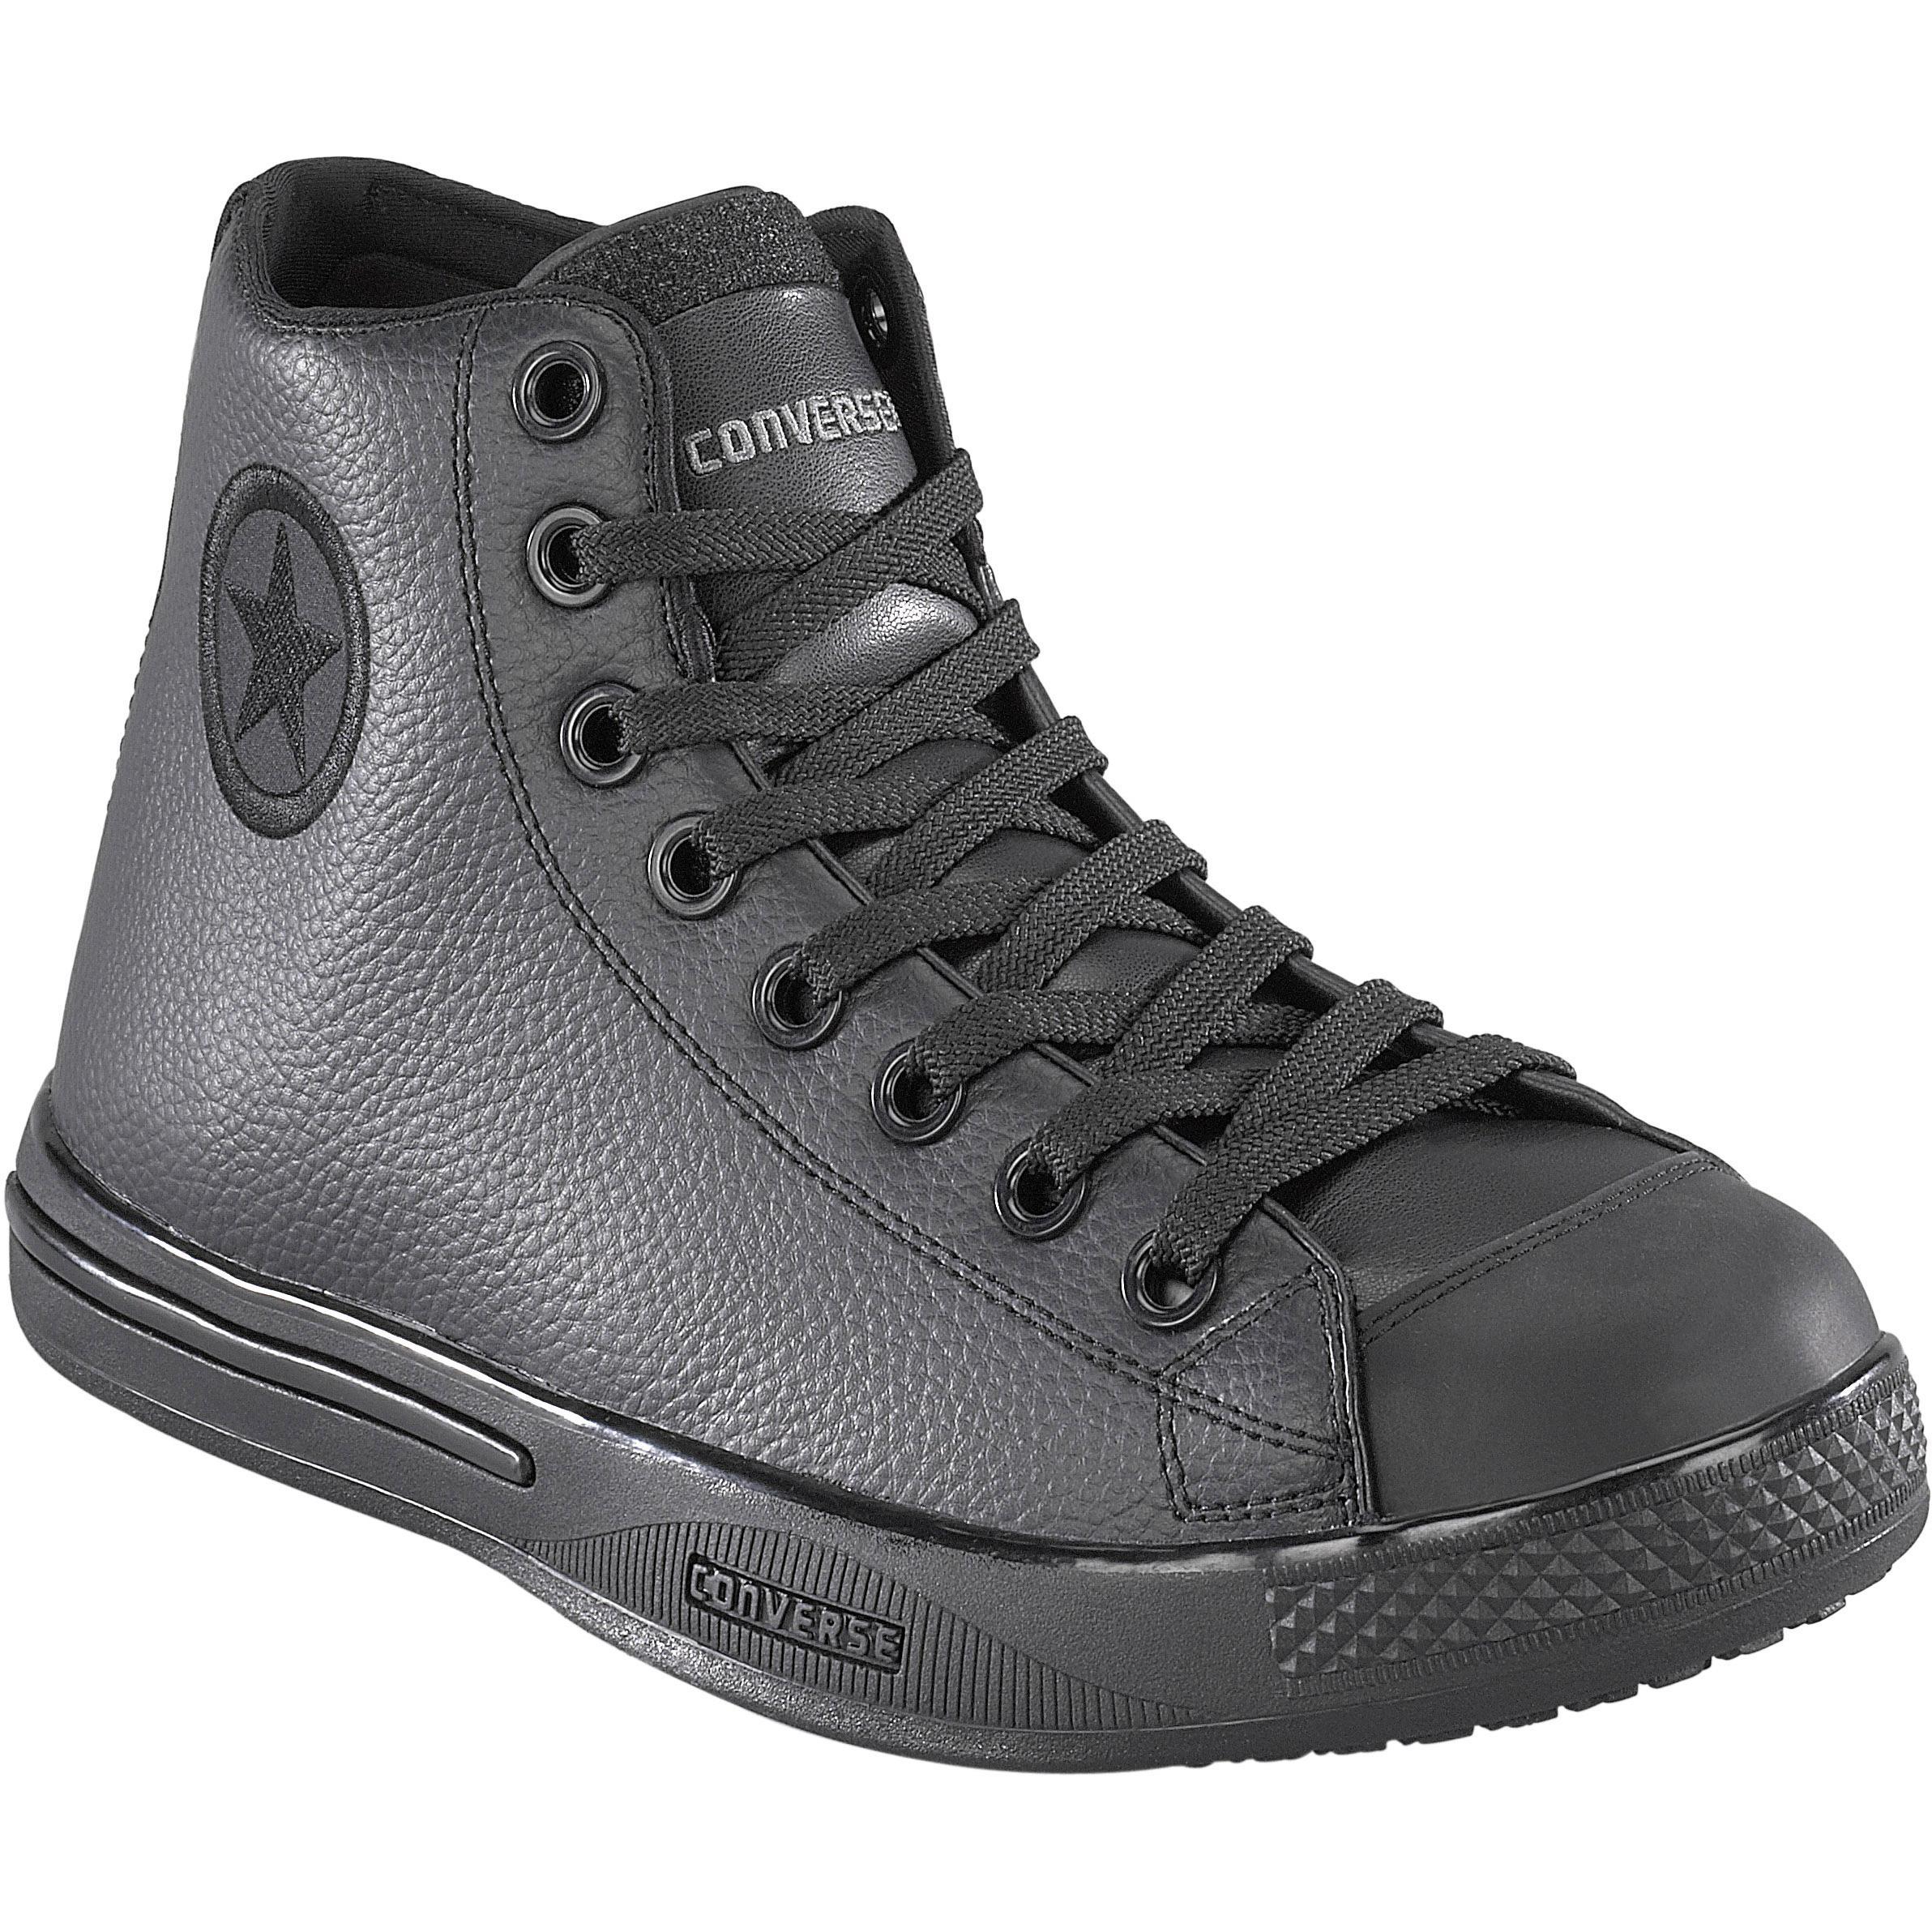 Converse Slip Resistant Hi Top - Lehigh Safety Shoes